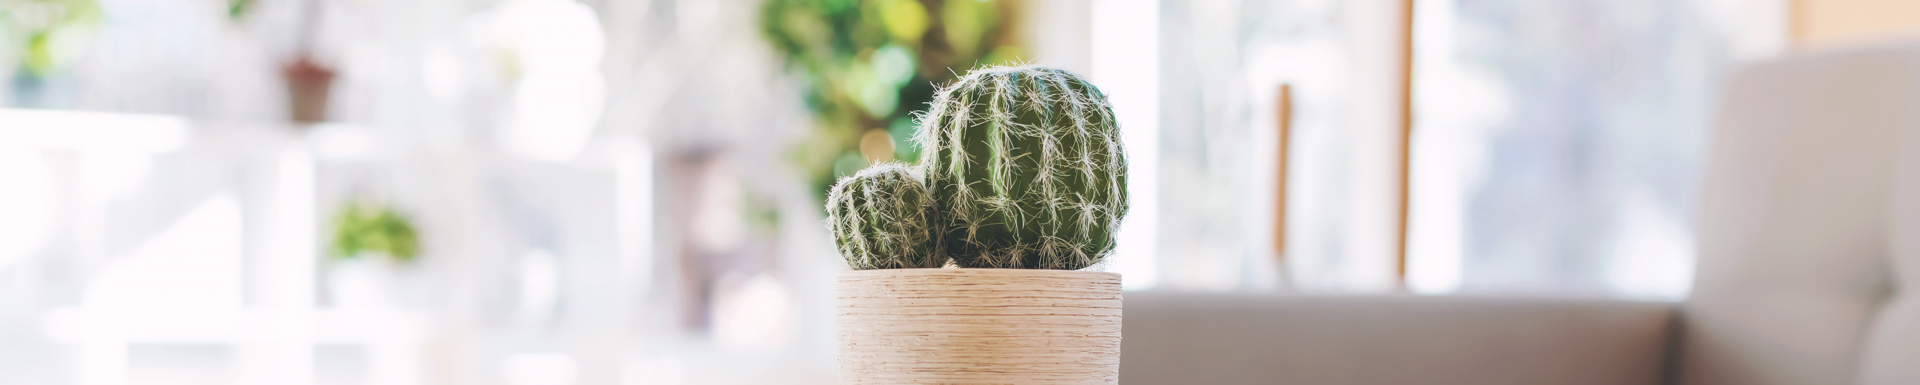 table view of mini cactus